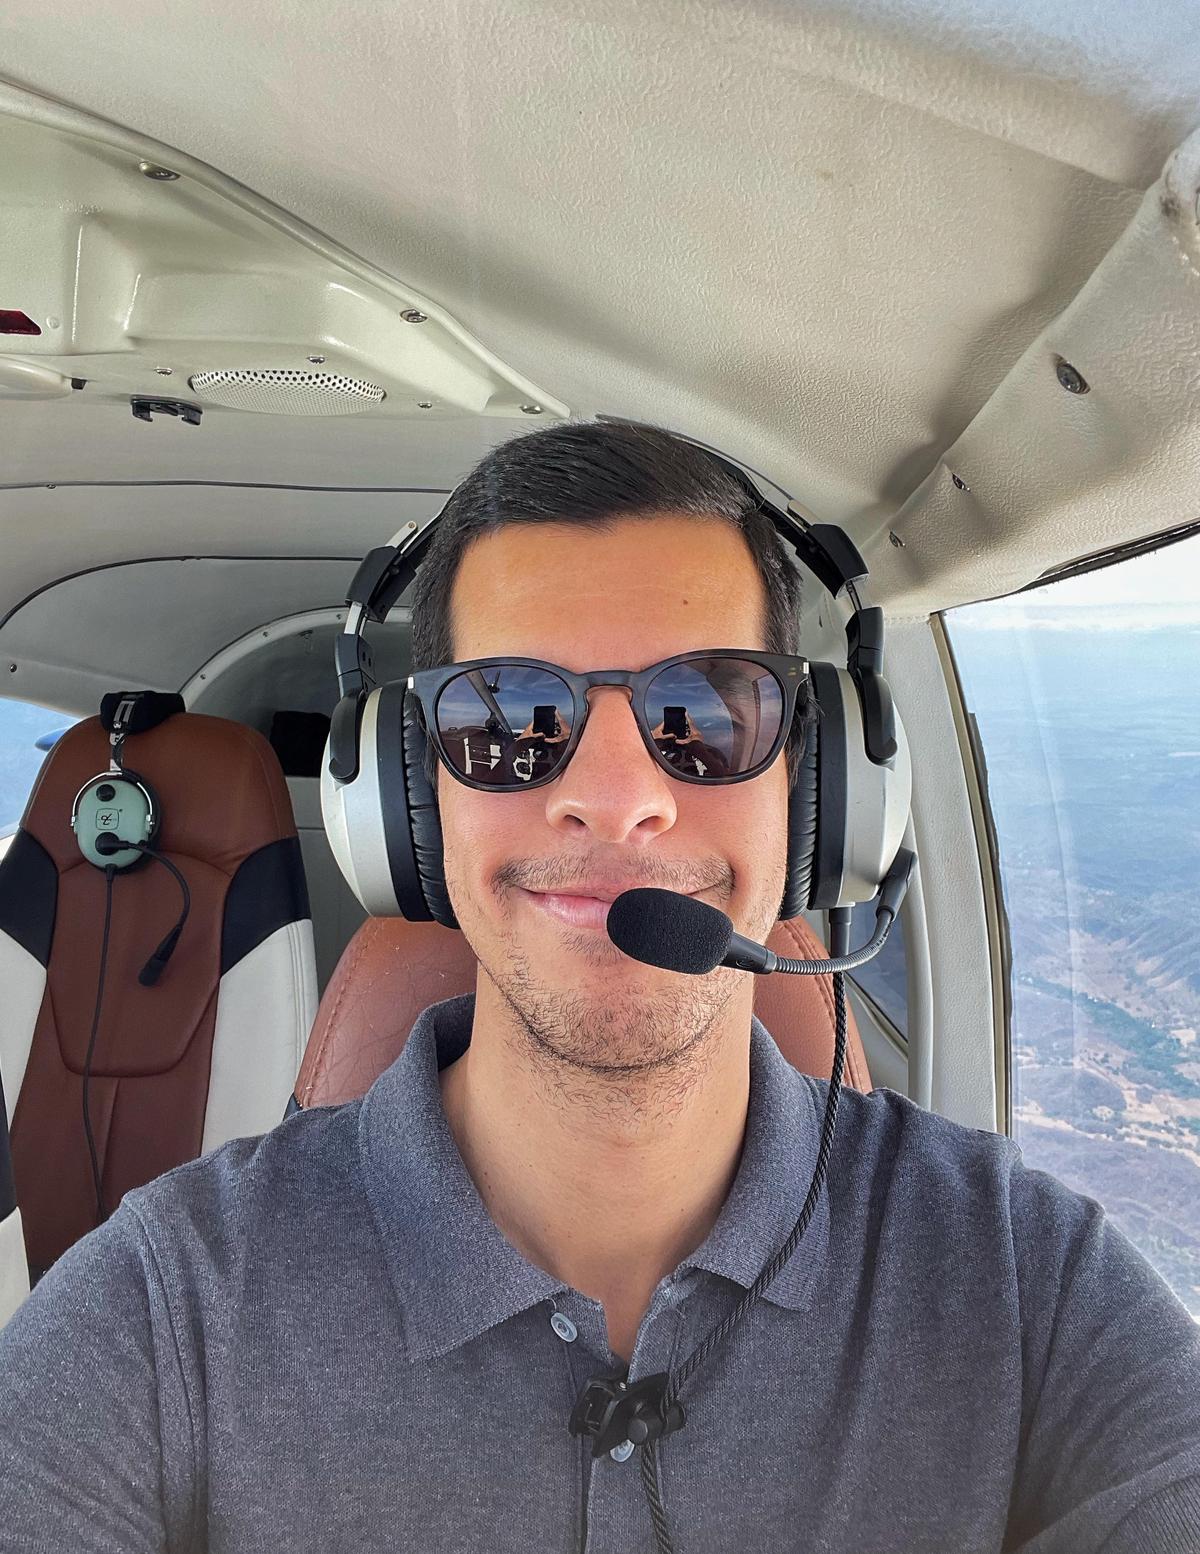 Felipe Chavez, 29, is a pilot of 11 years, flight instructor, and hobby photographer from Costa Rica. (Courtesy of <a href="https://www.instagram.com/felipe_cj93/">Felipe Chavez</a>)